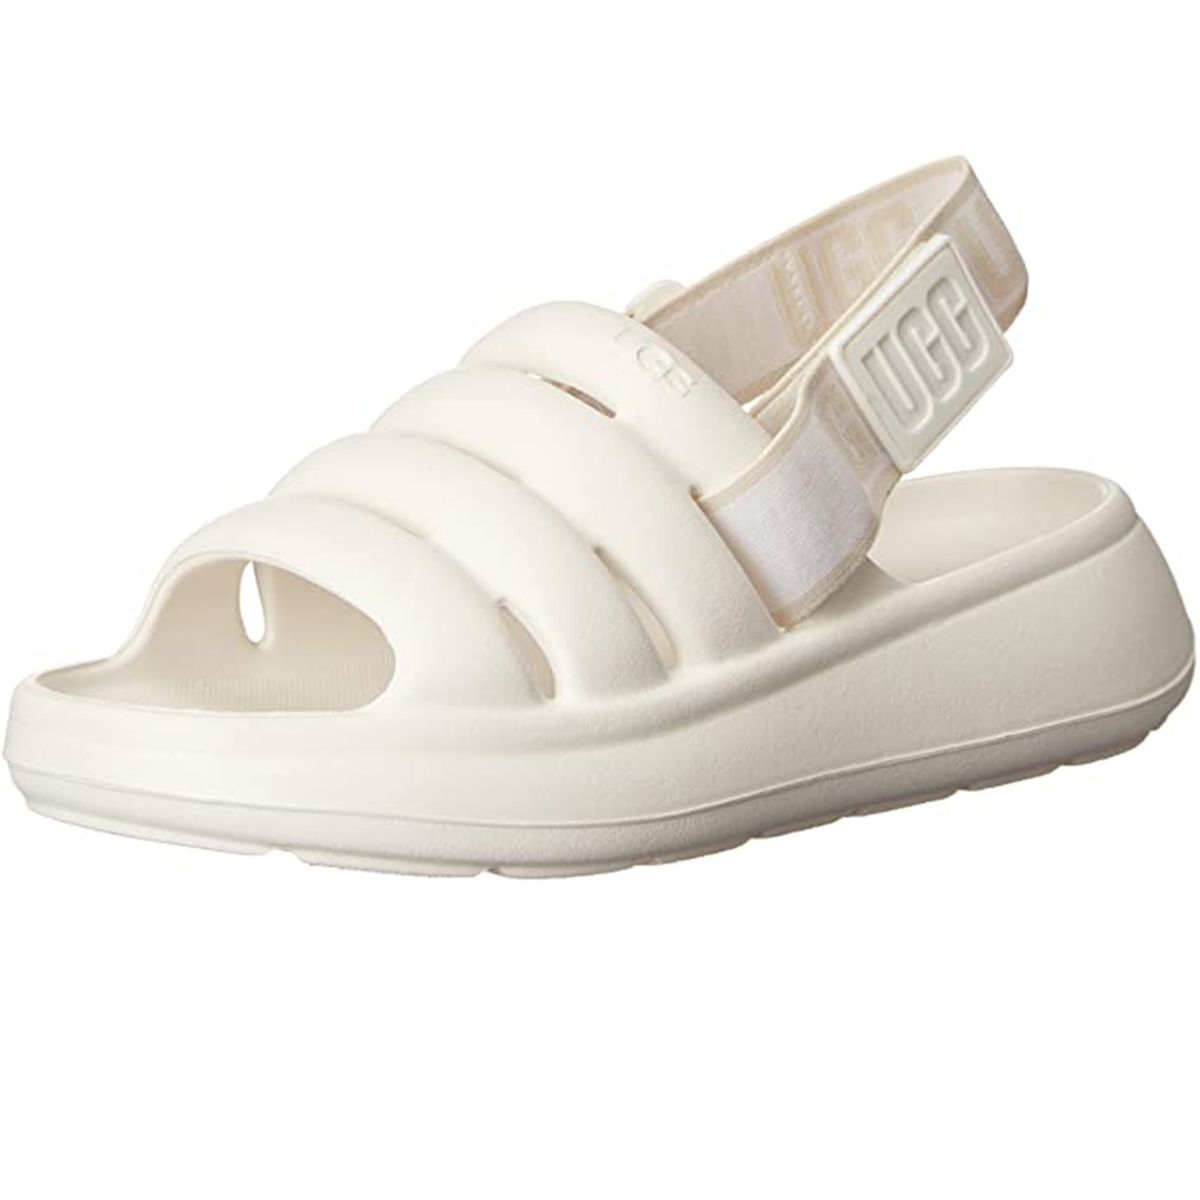 Shopbop sandal trends